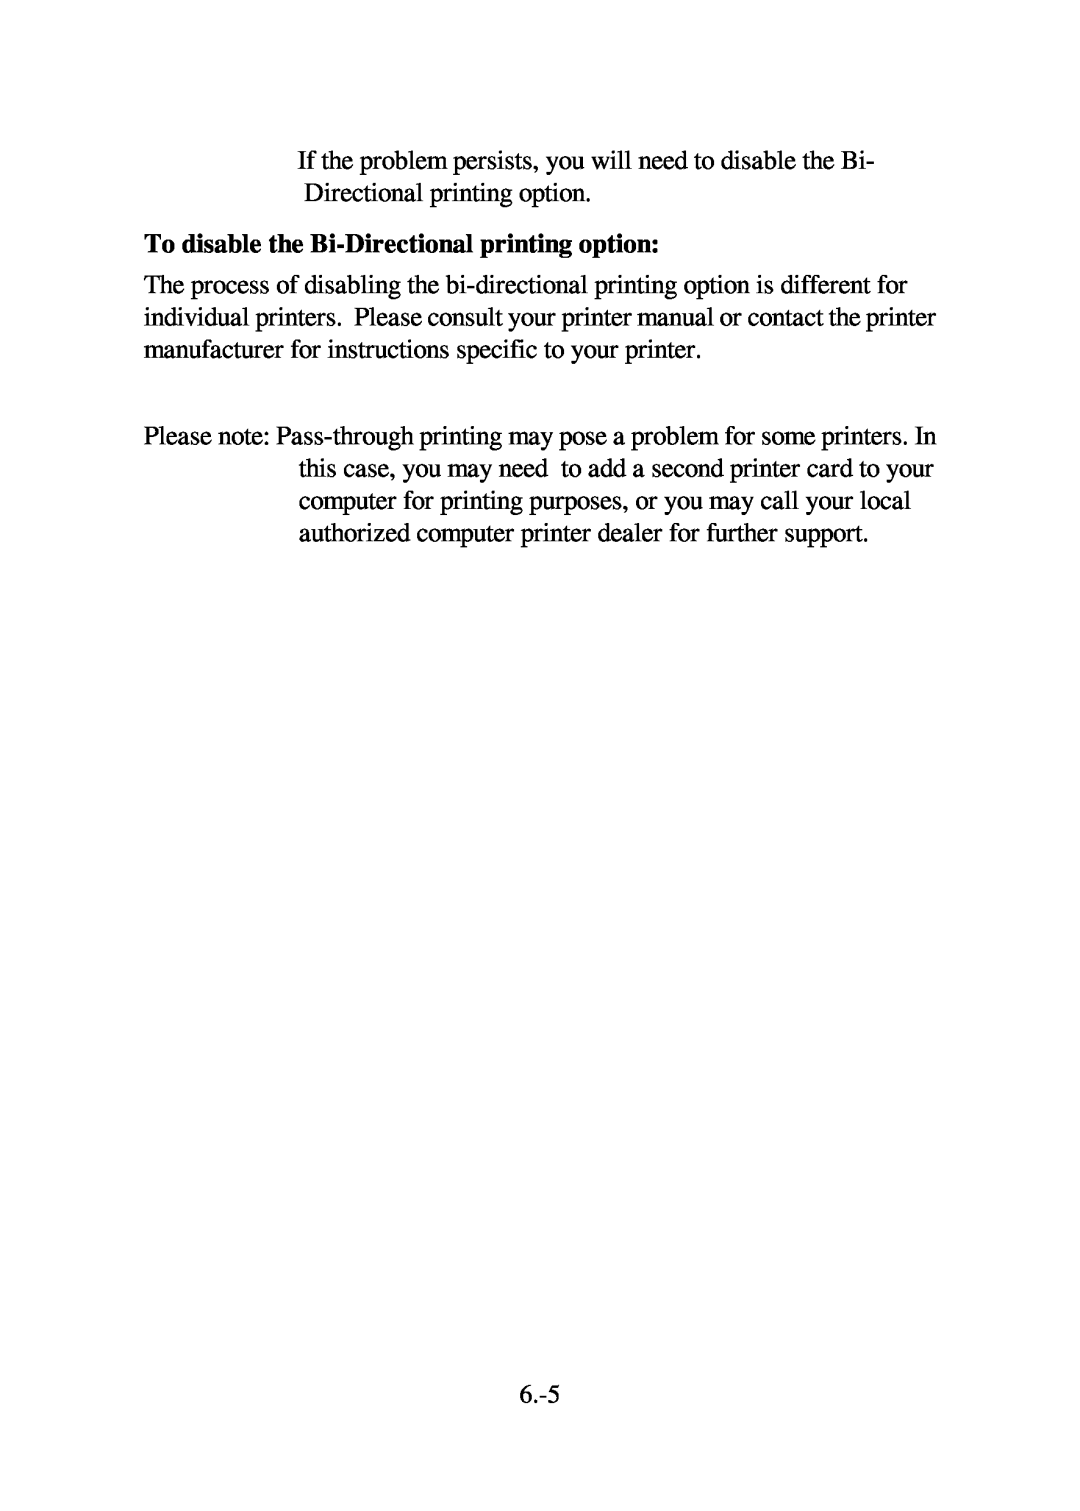 IBM Ricoh FB735 user manual To disable the Bi-Directional printing option 